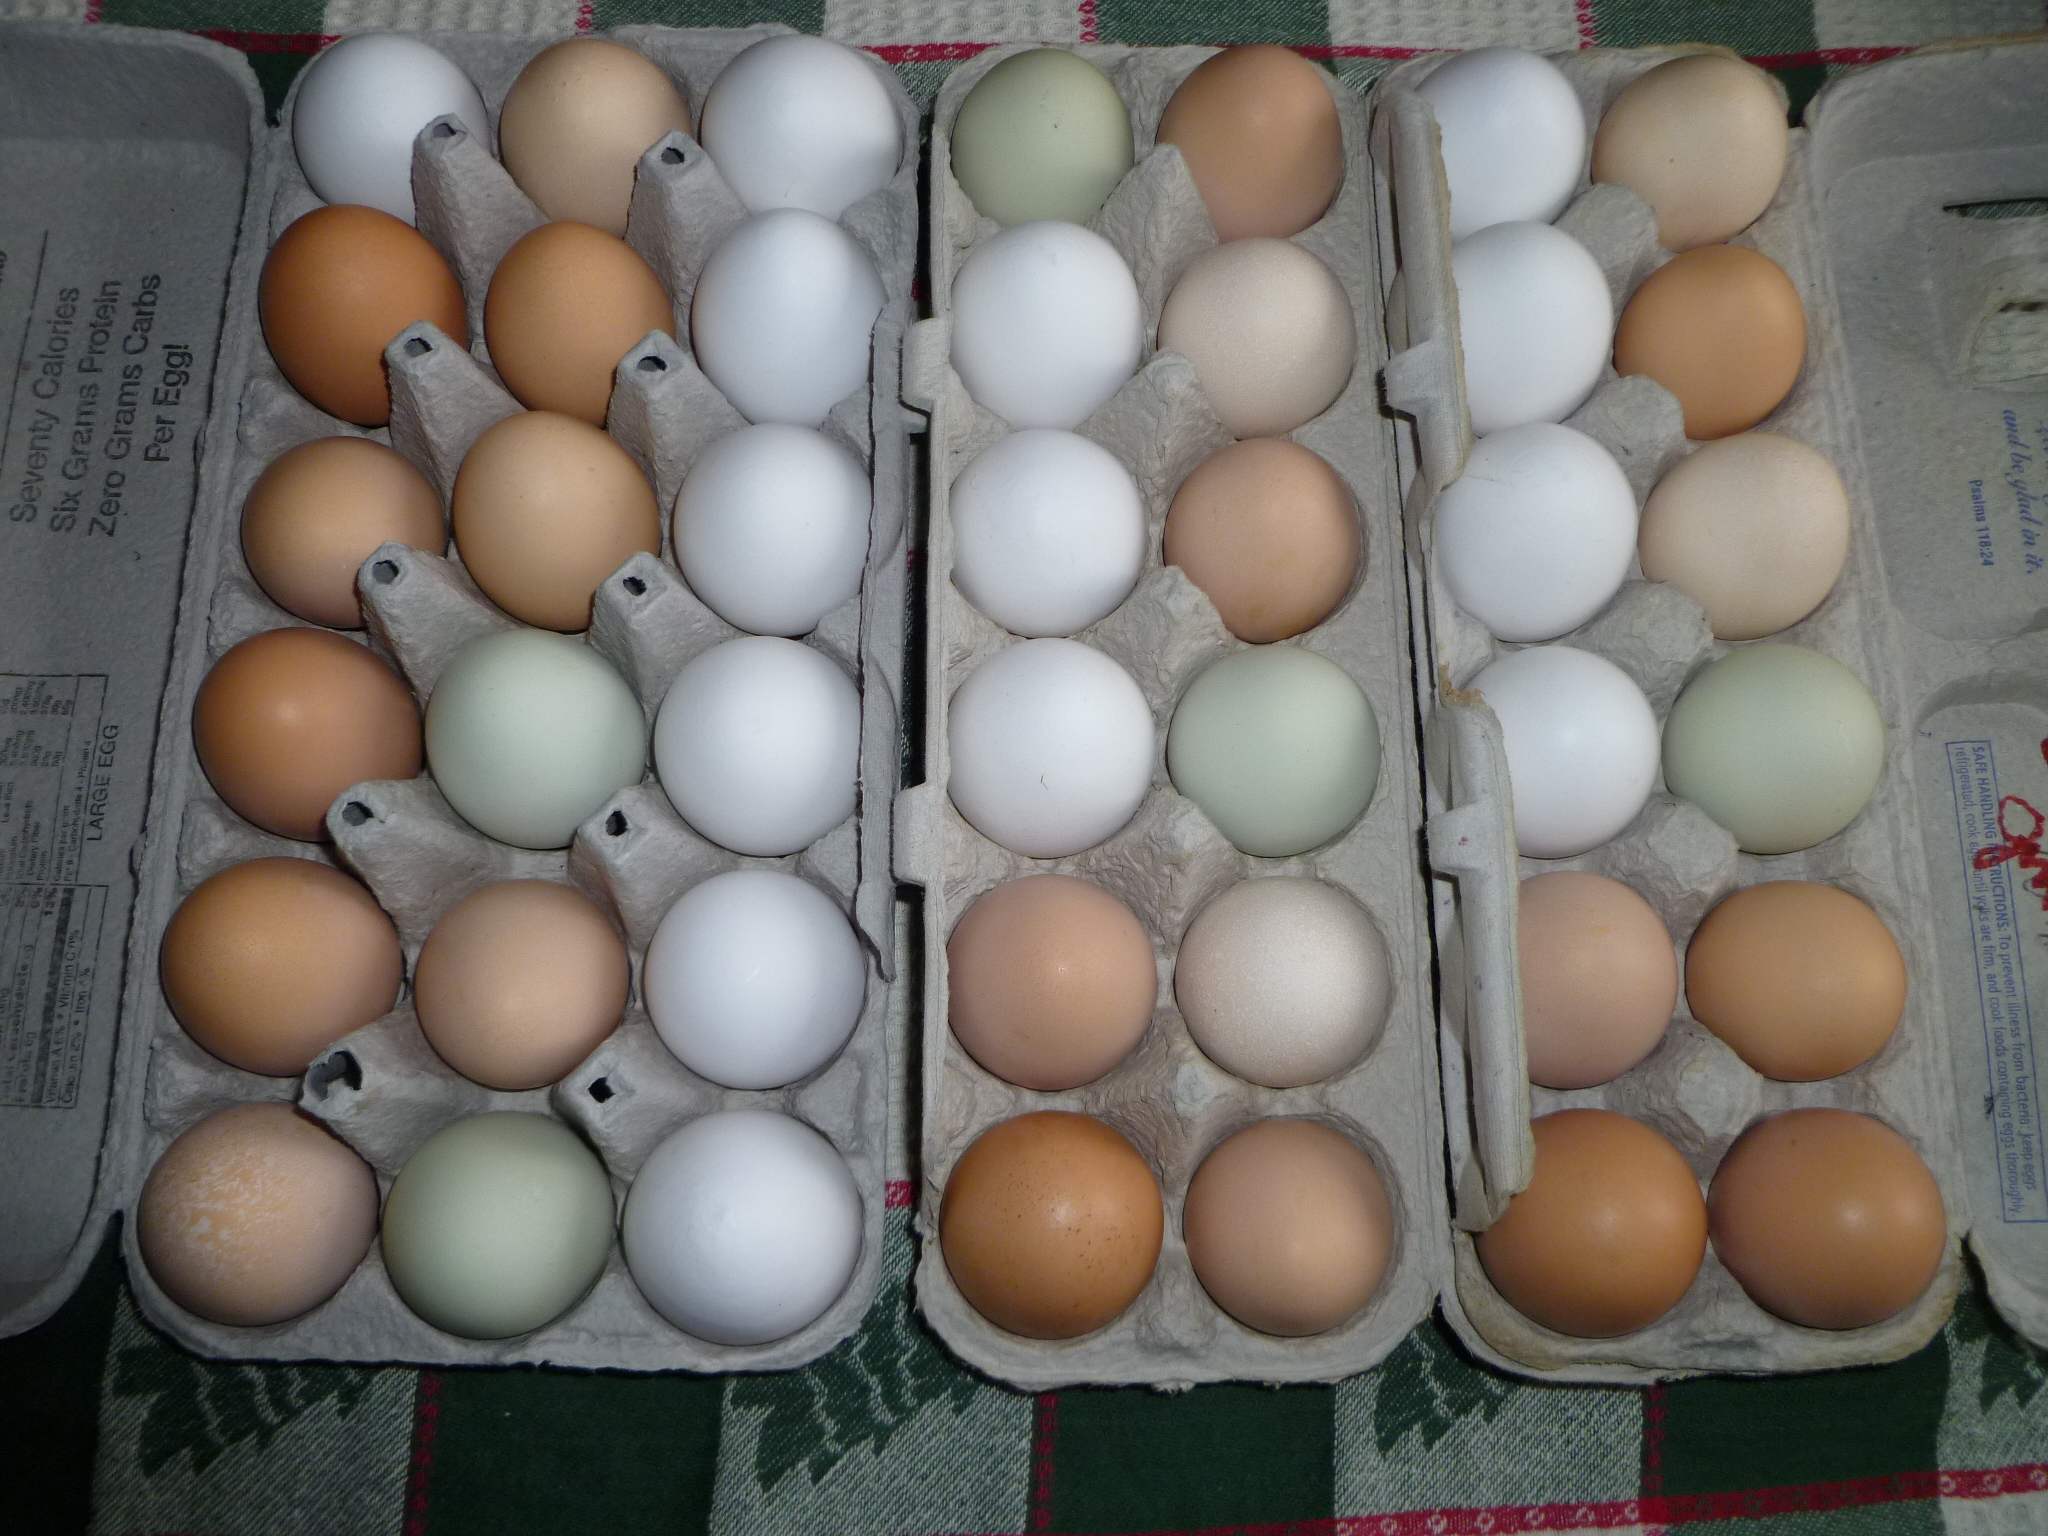 3 1/2 dozen worth of eggs